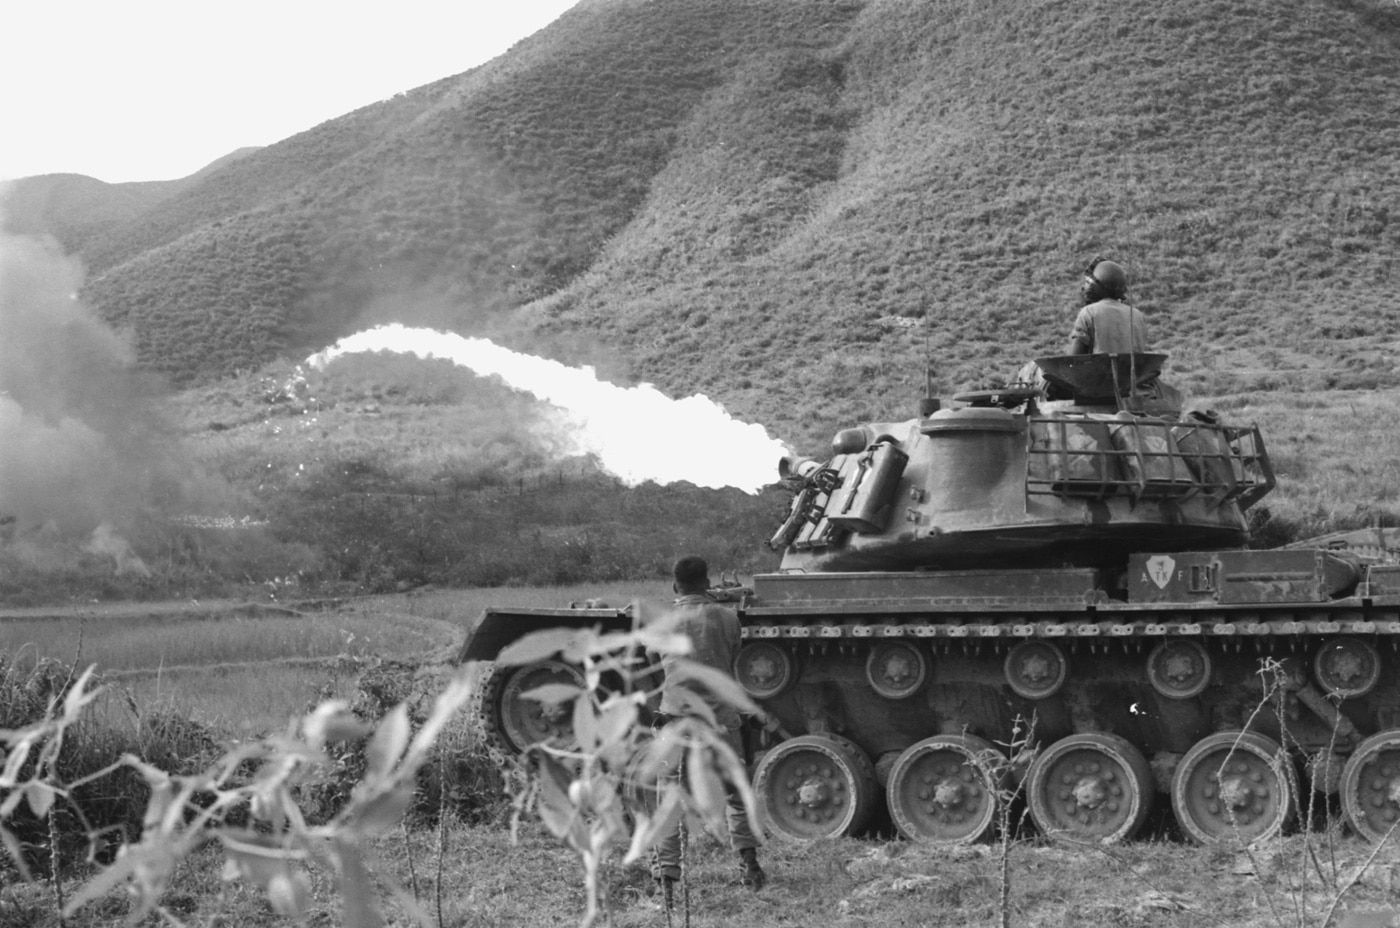 m67 flamethrower tank in vietnam